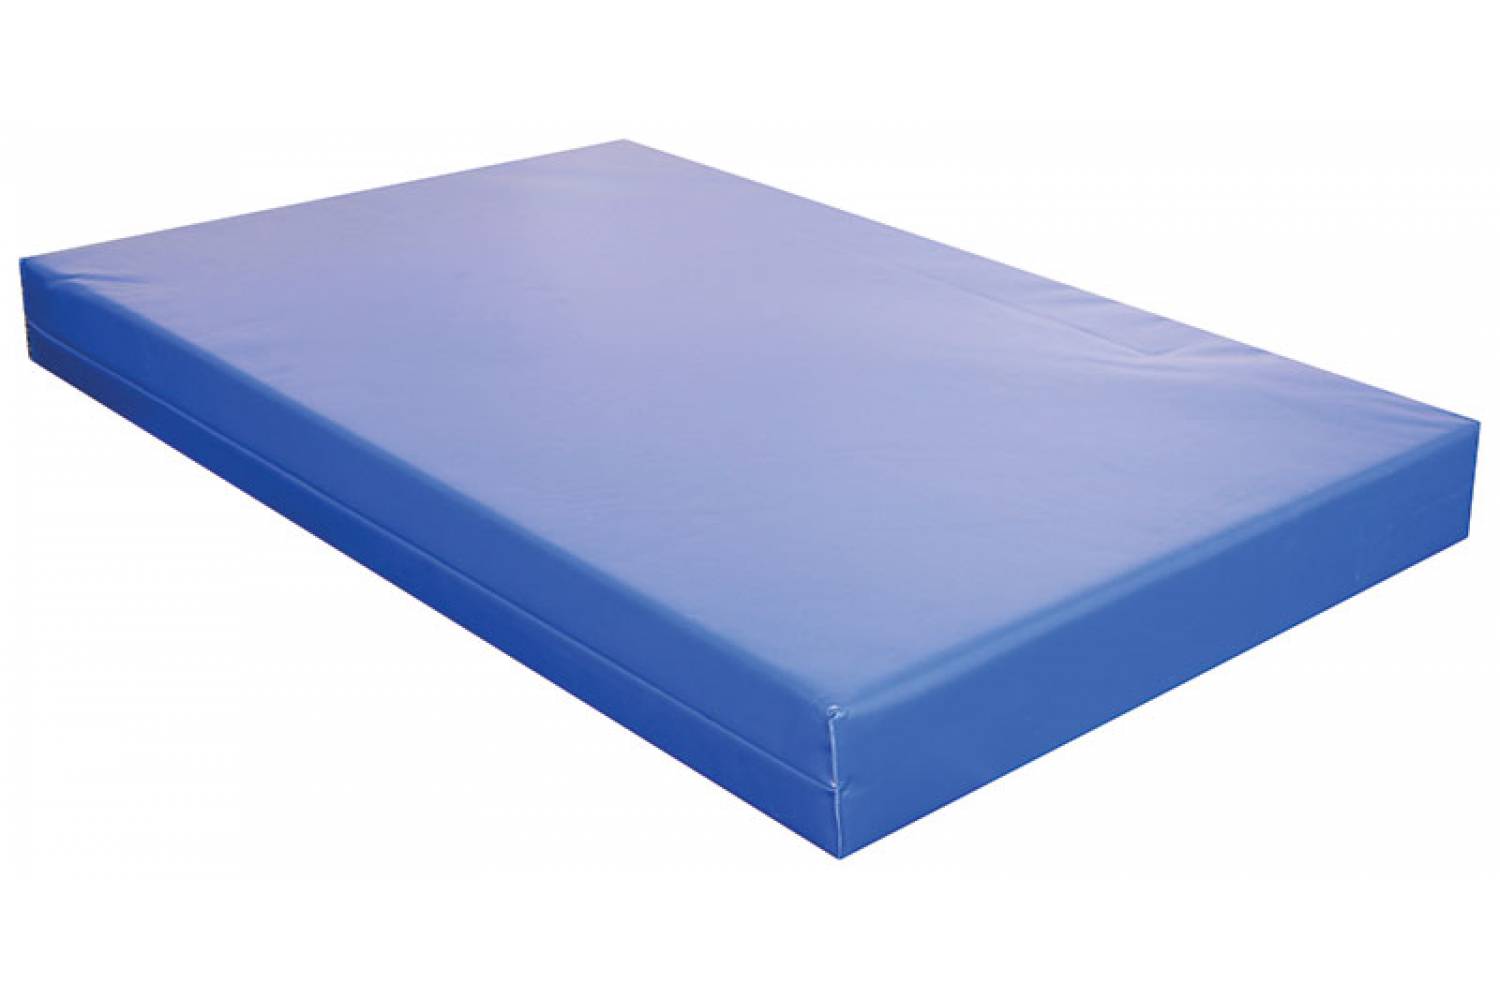 waterproof mattress cover for babies